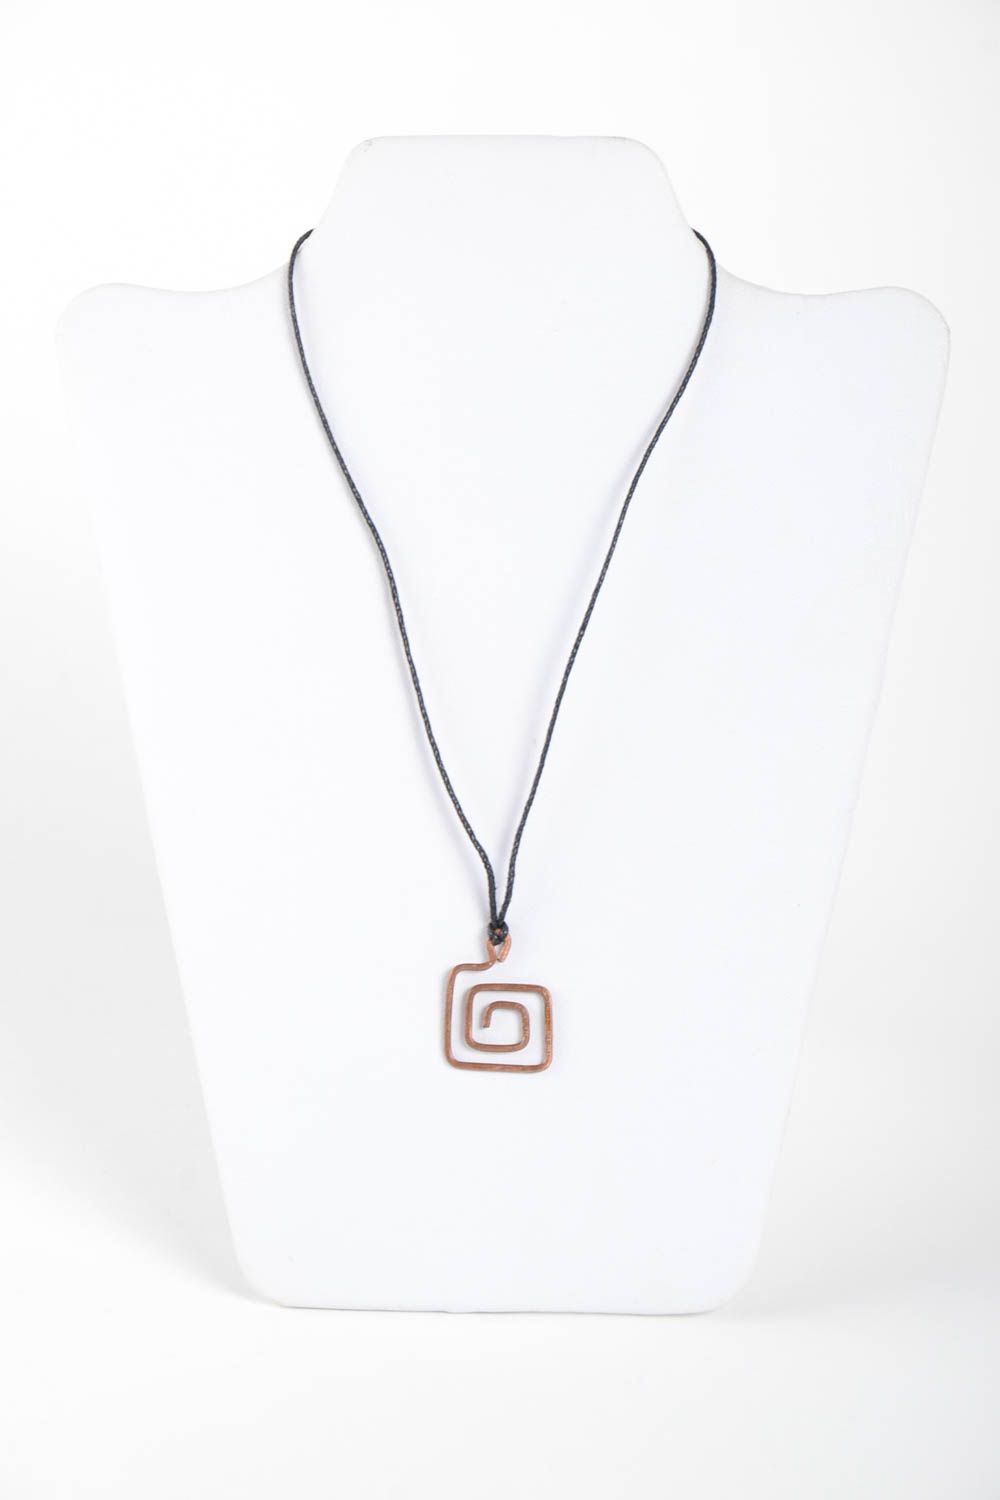 Metal jewelry handmade copper pendant wire wrap pendant designer jewelry photo 2